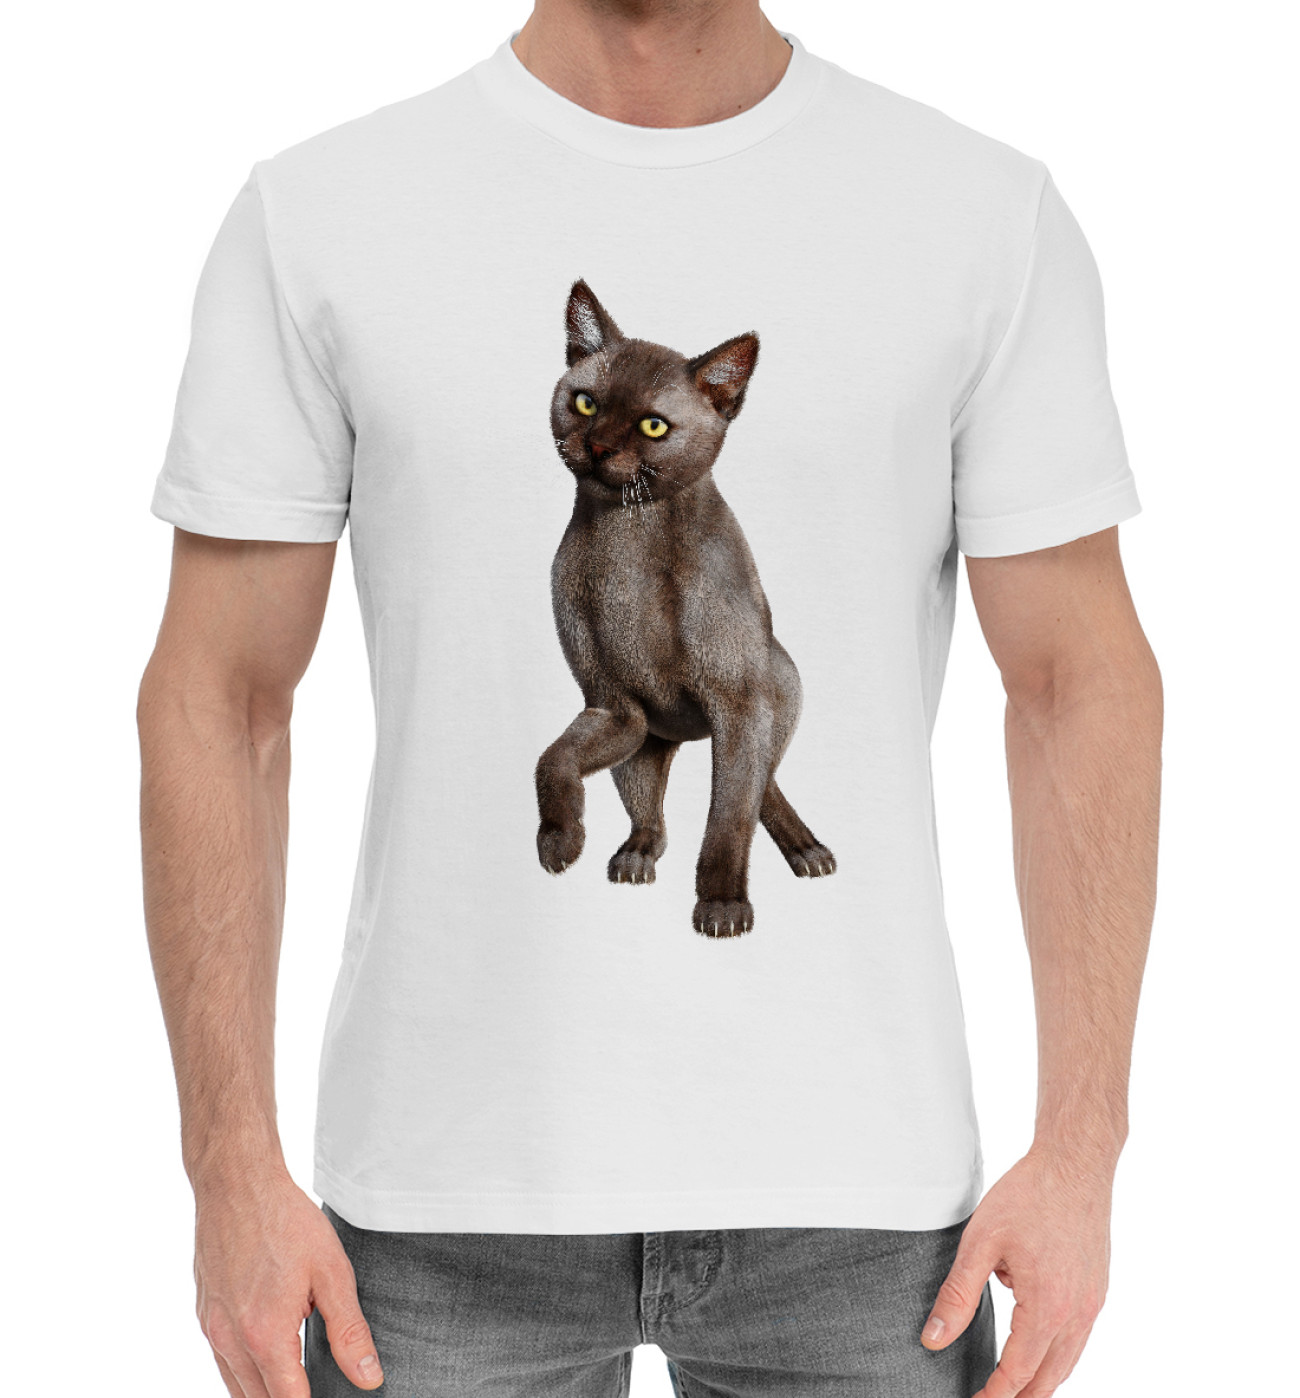 Мужская Хлопковая футболка Танцующий кот, артикул: CAT-838390-hfu-2